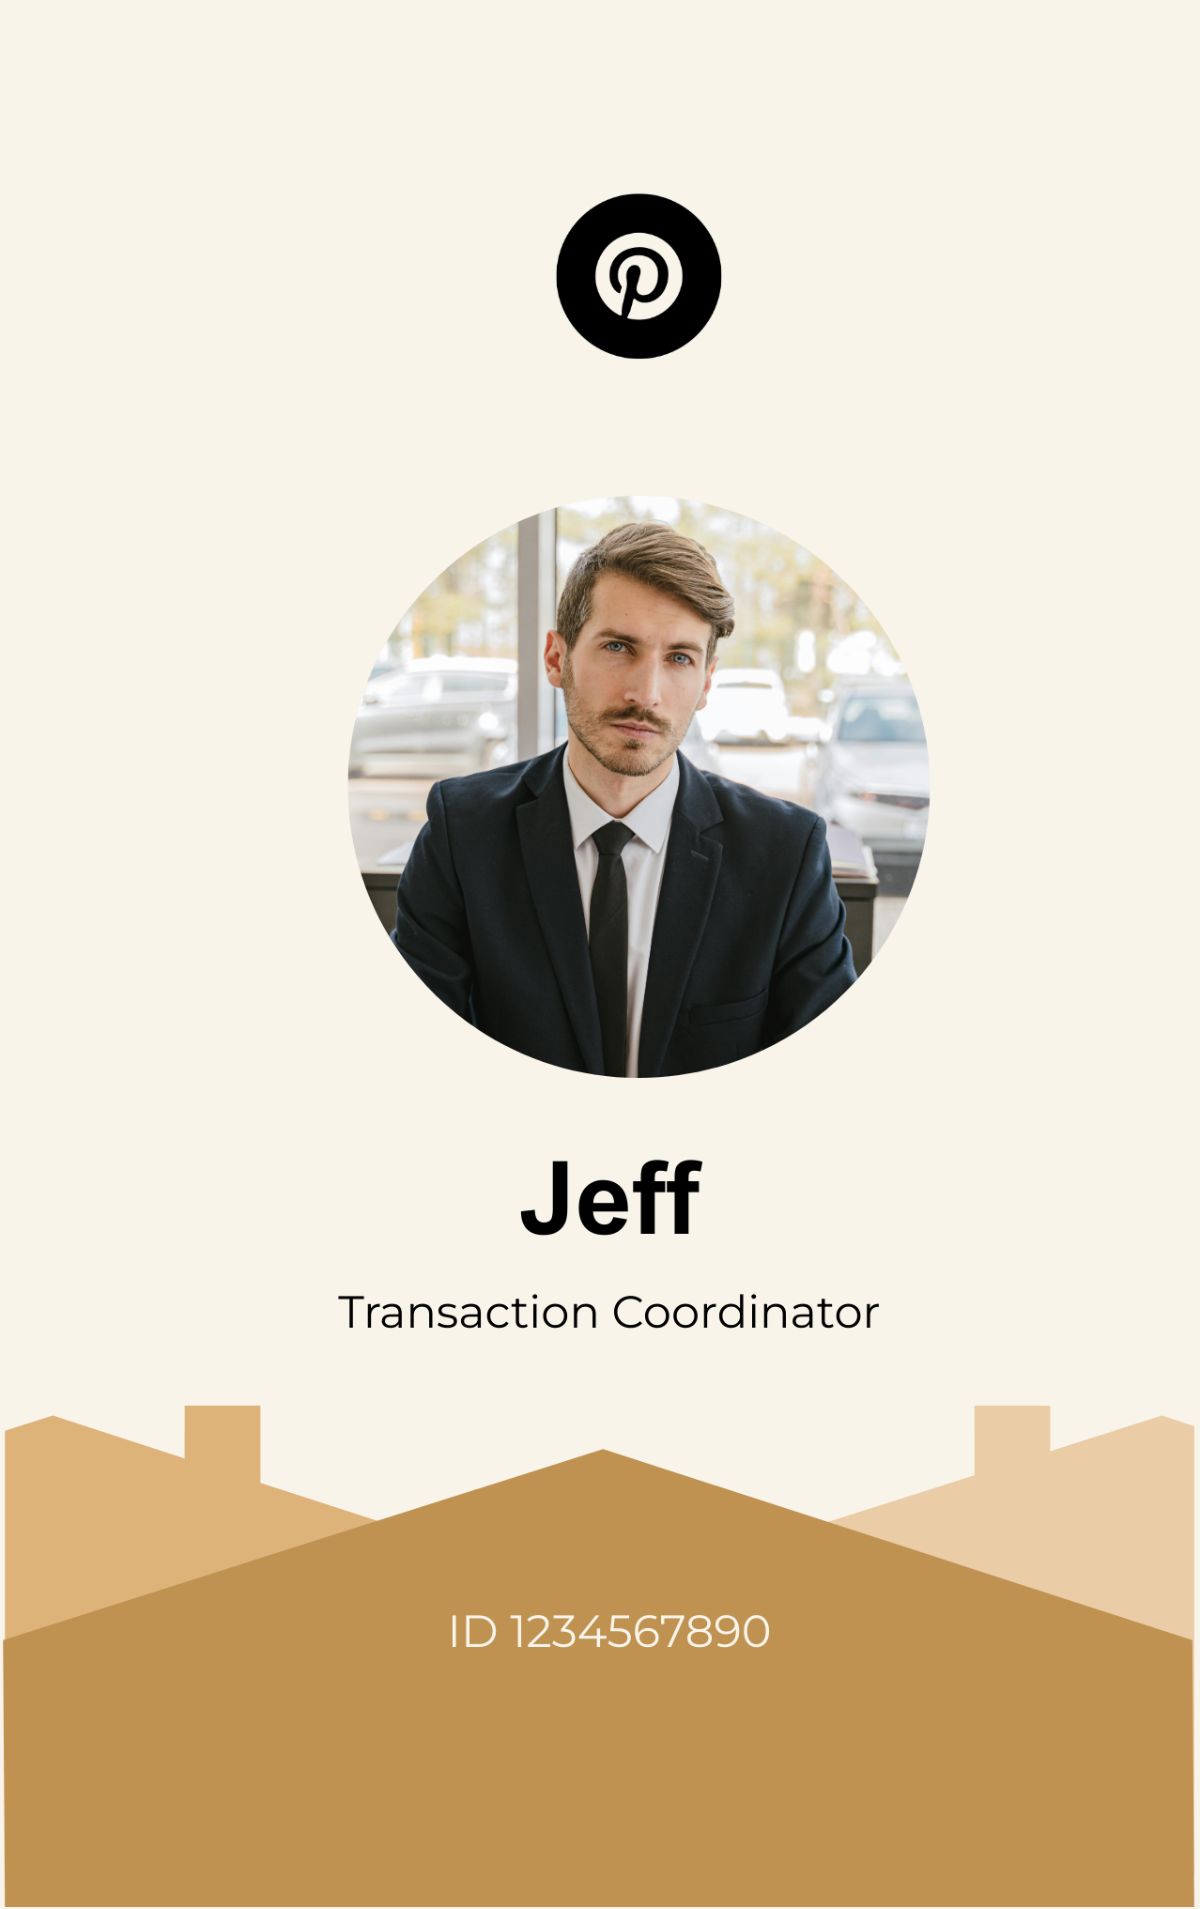 Real Estate Transaction Coordinator ID Card